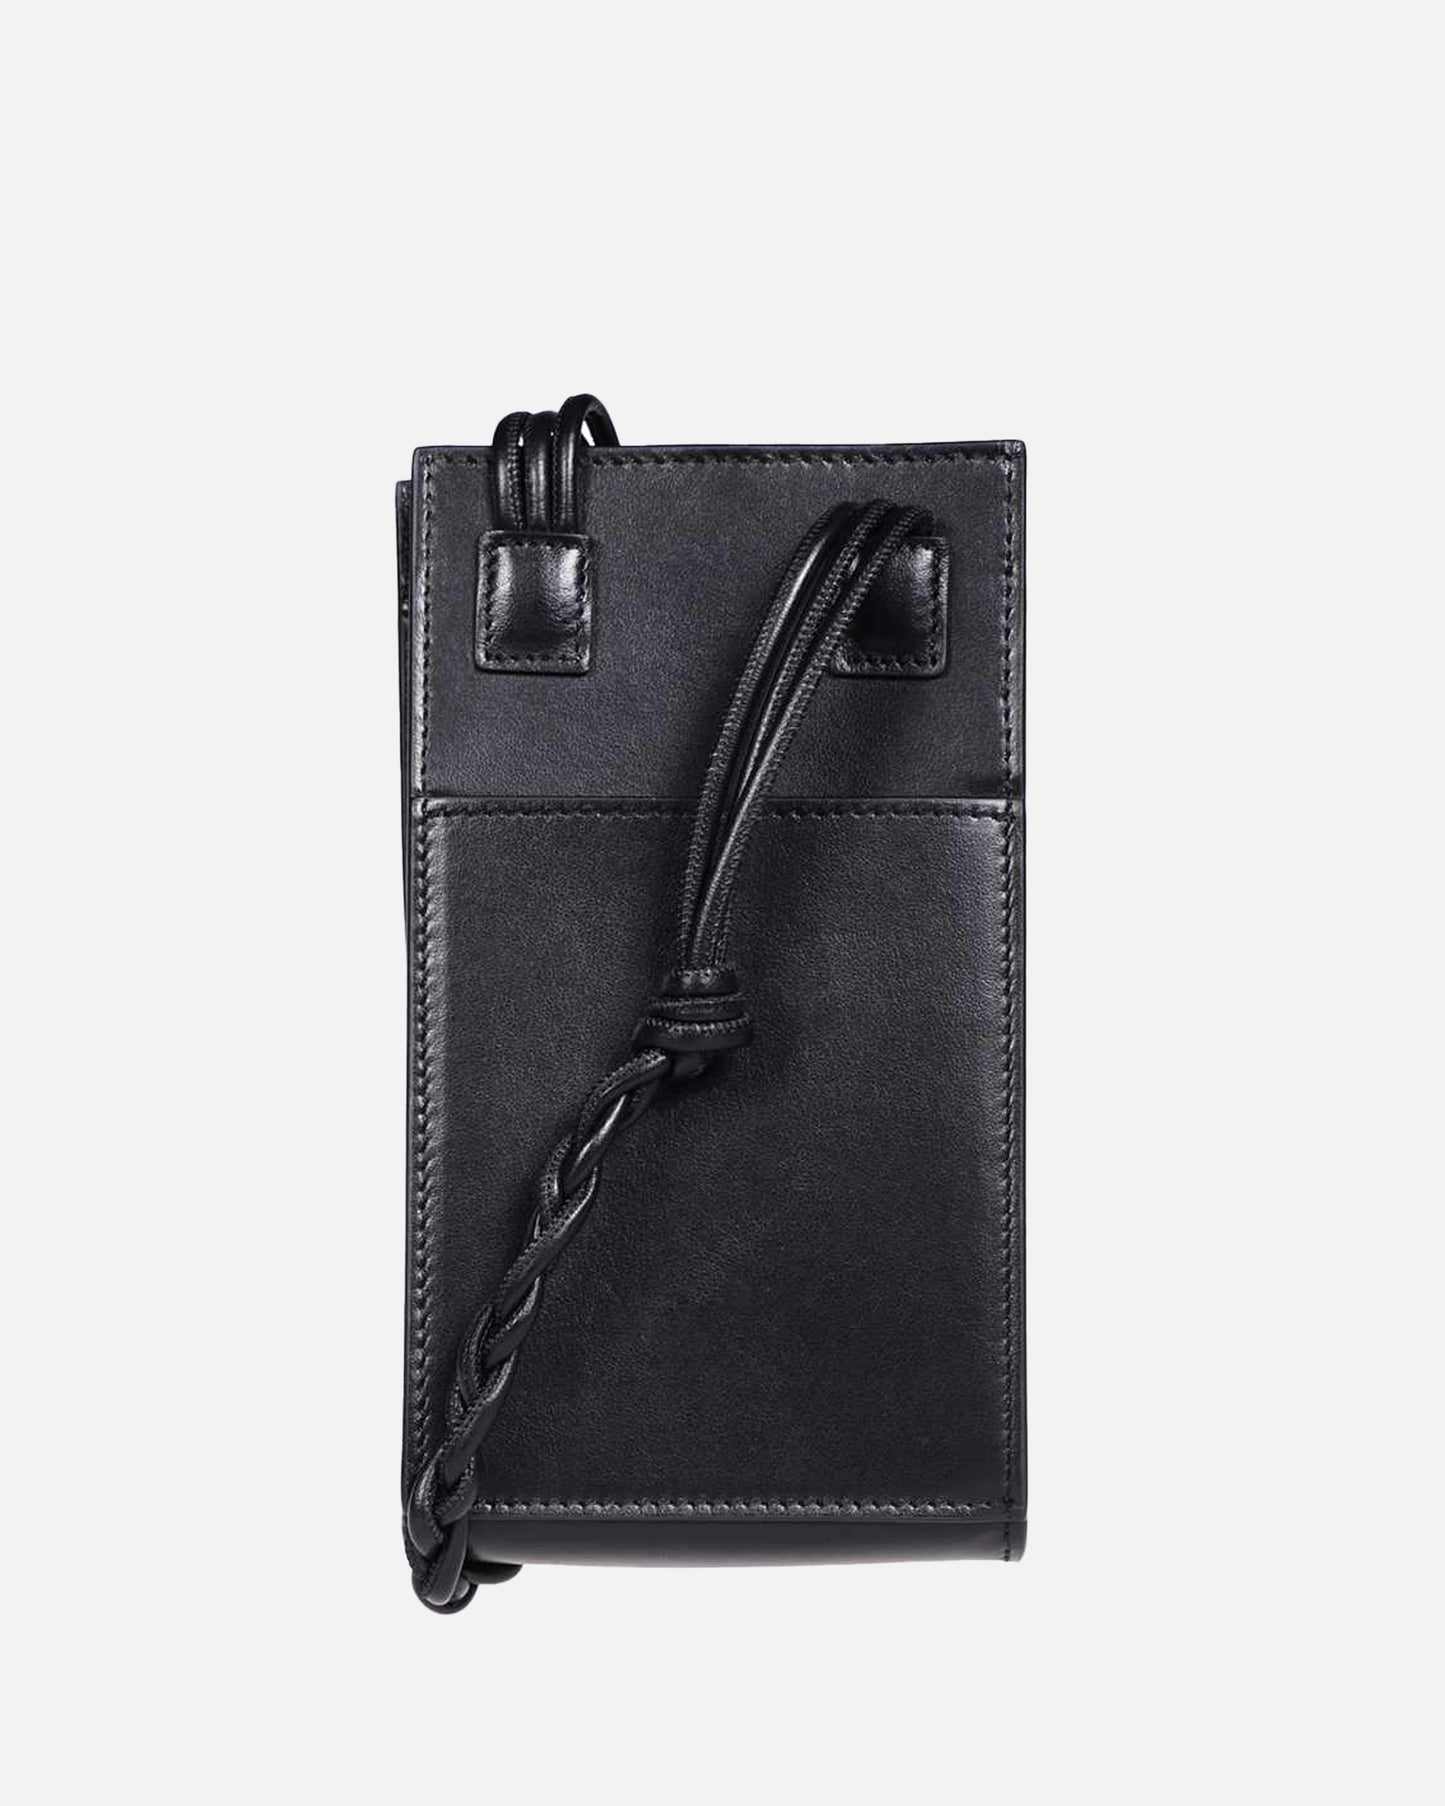 Jil Sander Leather Goods Tangle Phone Case in Black.